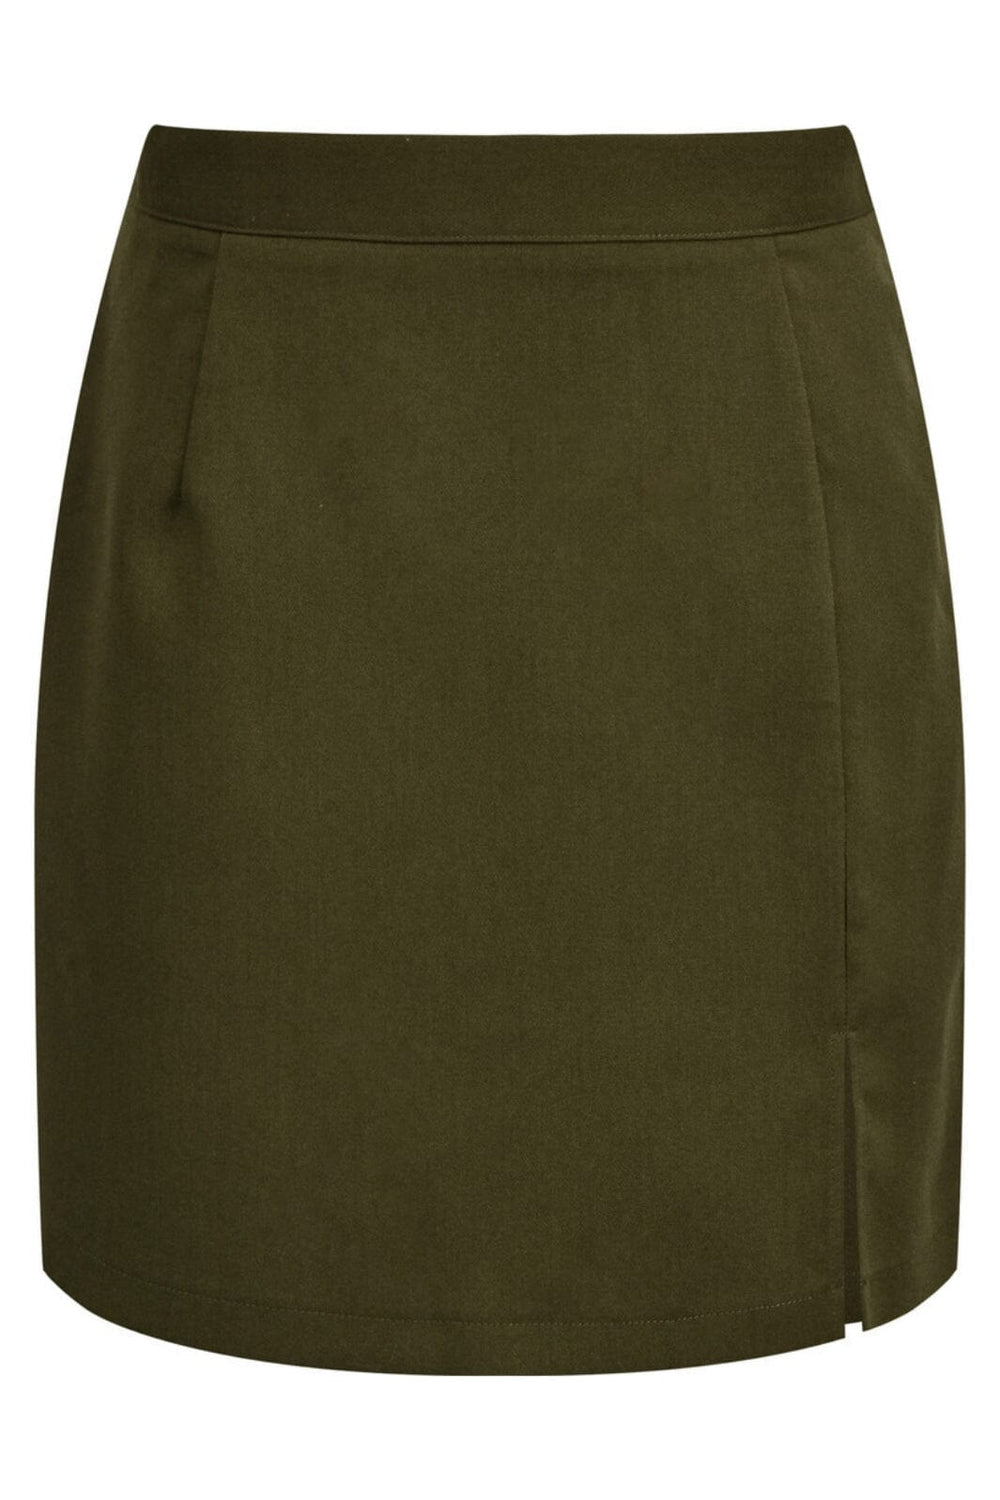 A-VIEW - Annali Skirt-1 - 894 Army Nederdele 